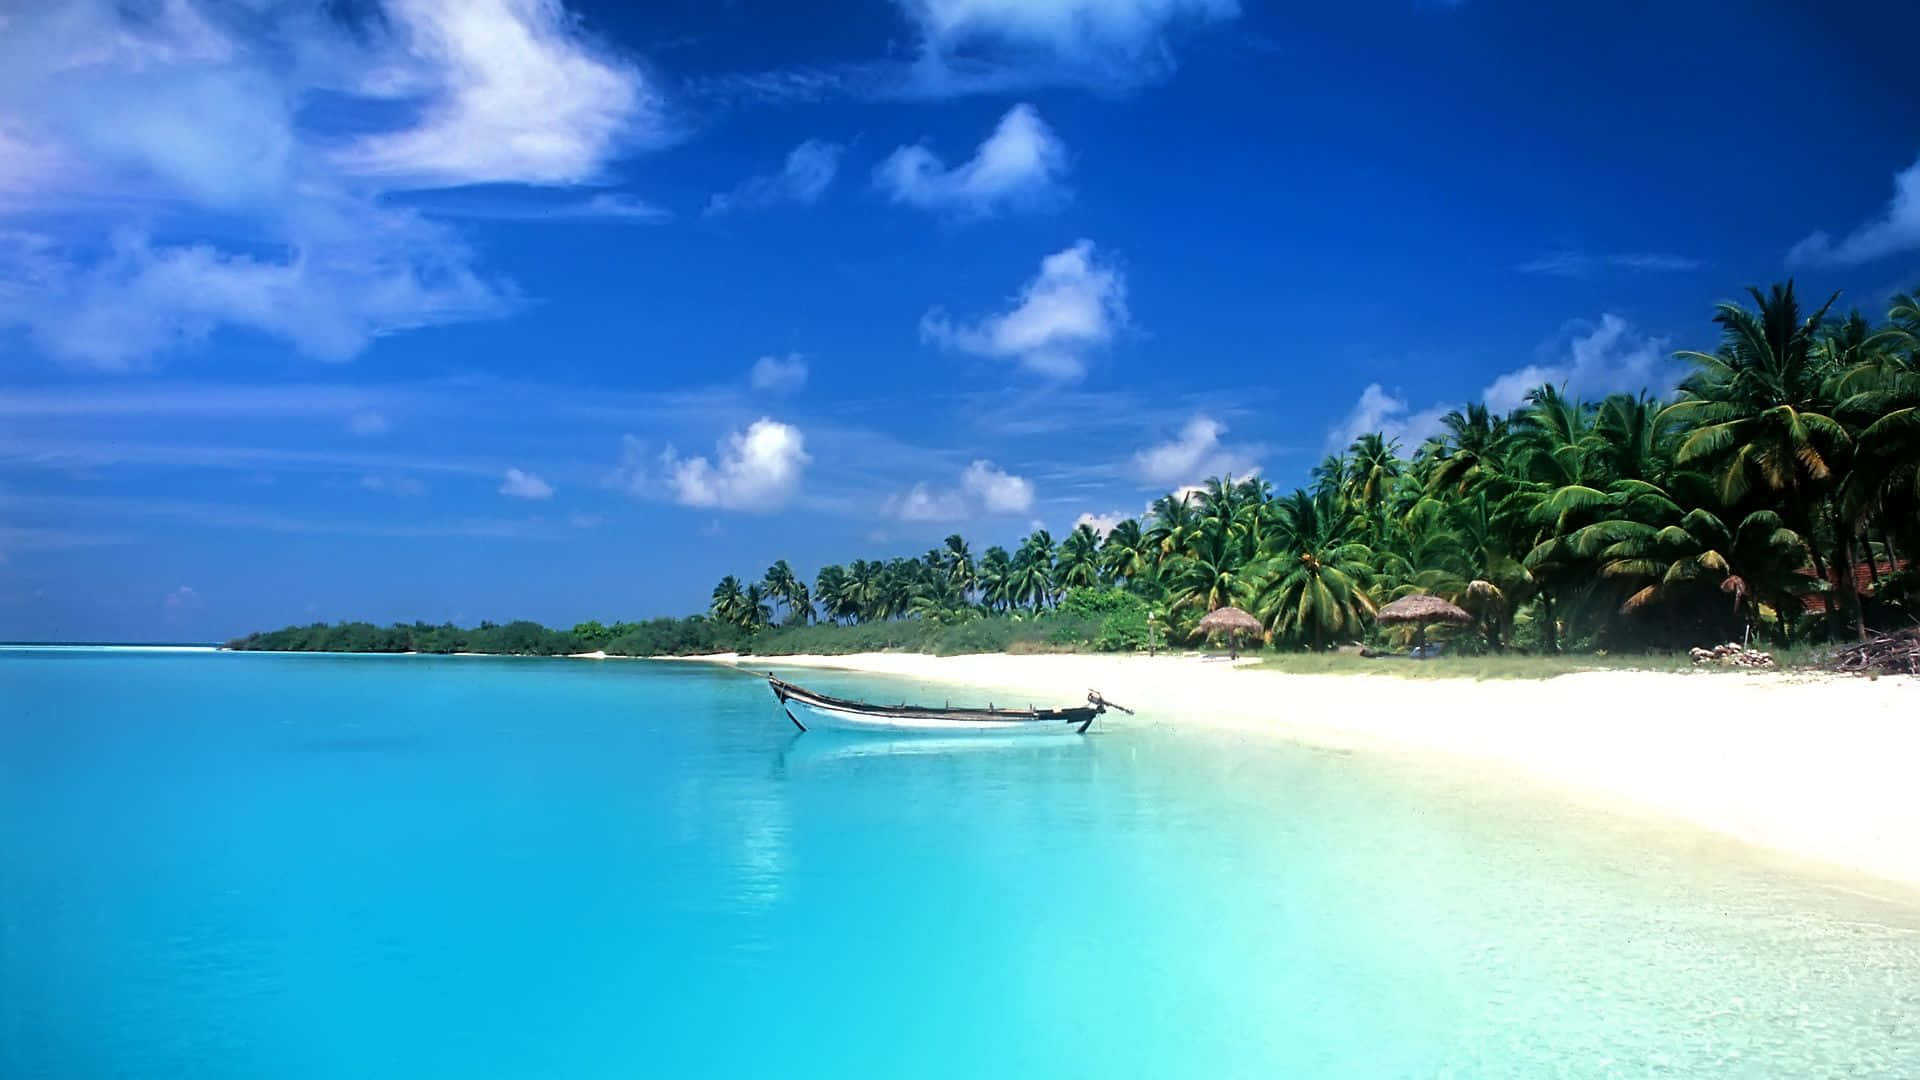 Enjoy the beauty of a serene beach paradise Wallpaper